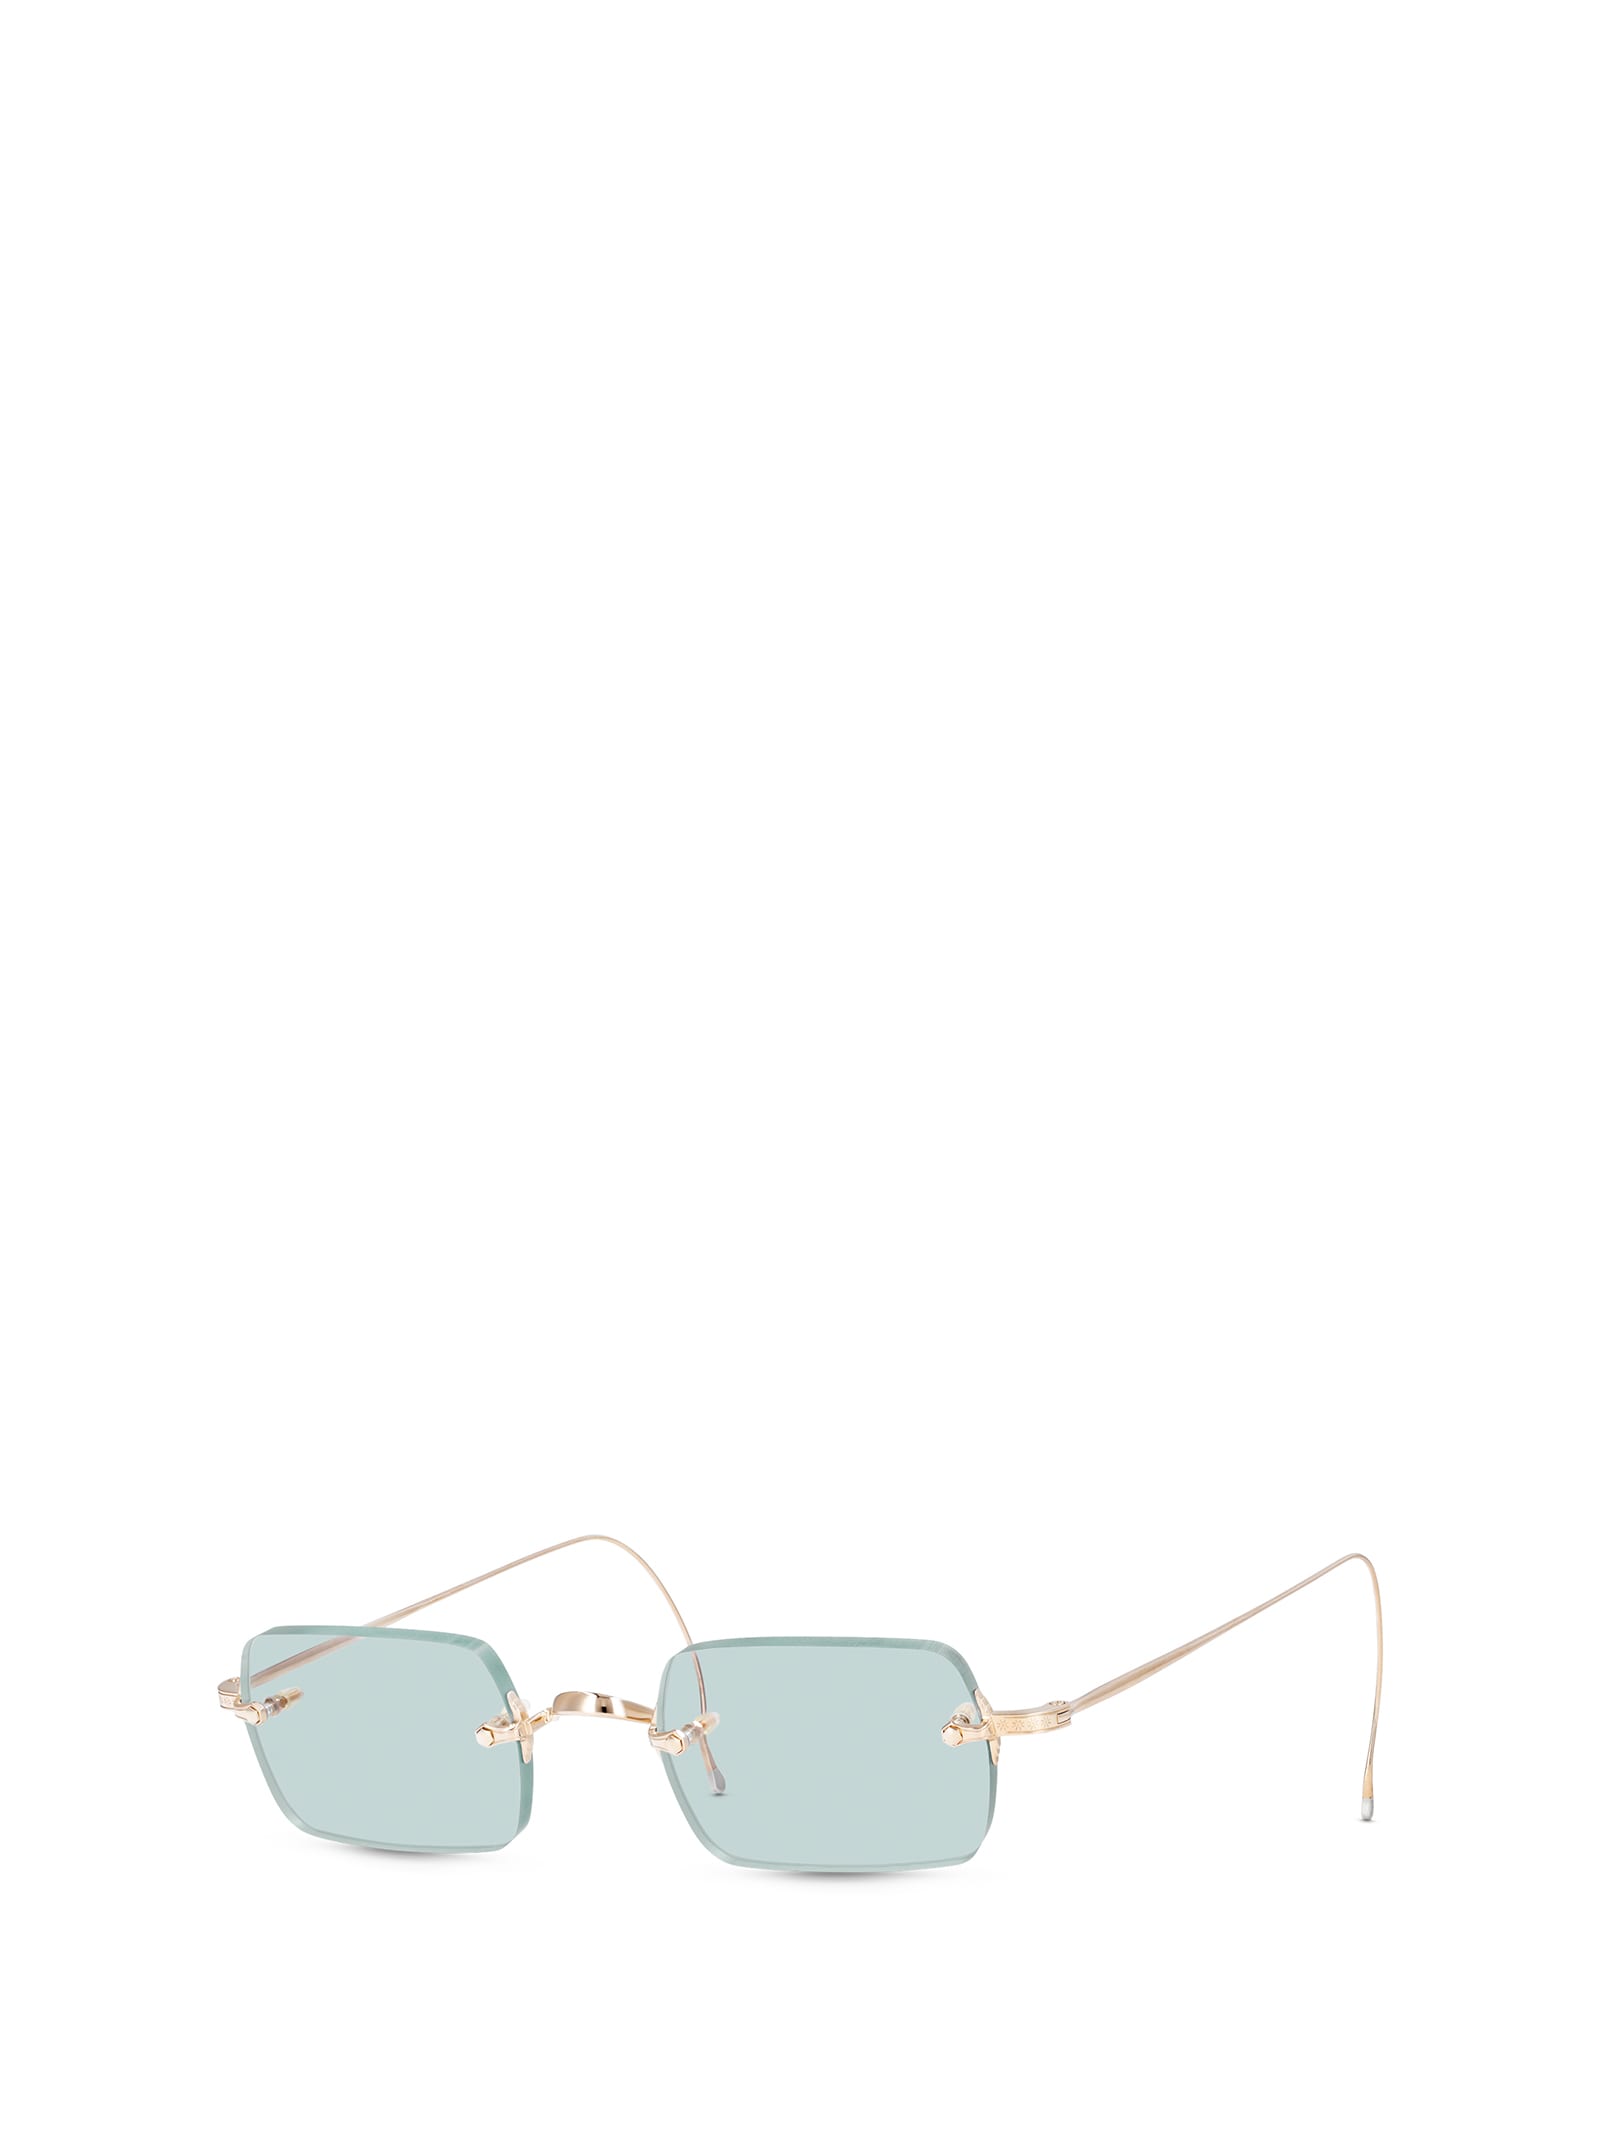 Shop Mr Leight Banzai S 12k White Gold Sunglasses